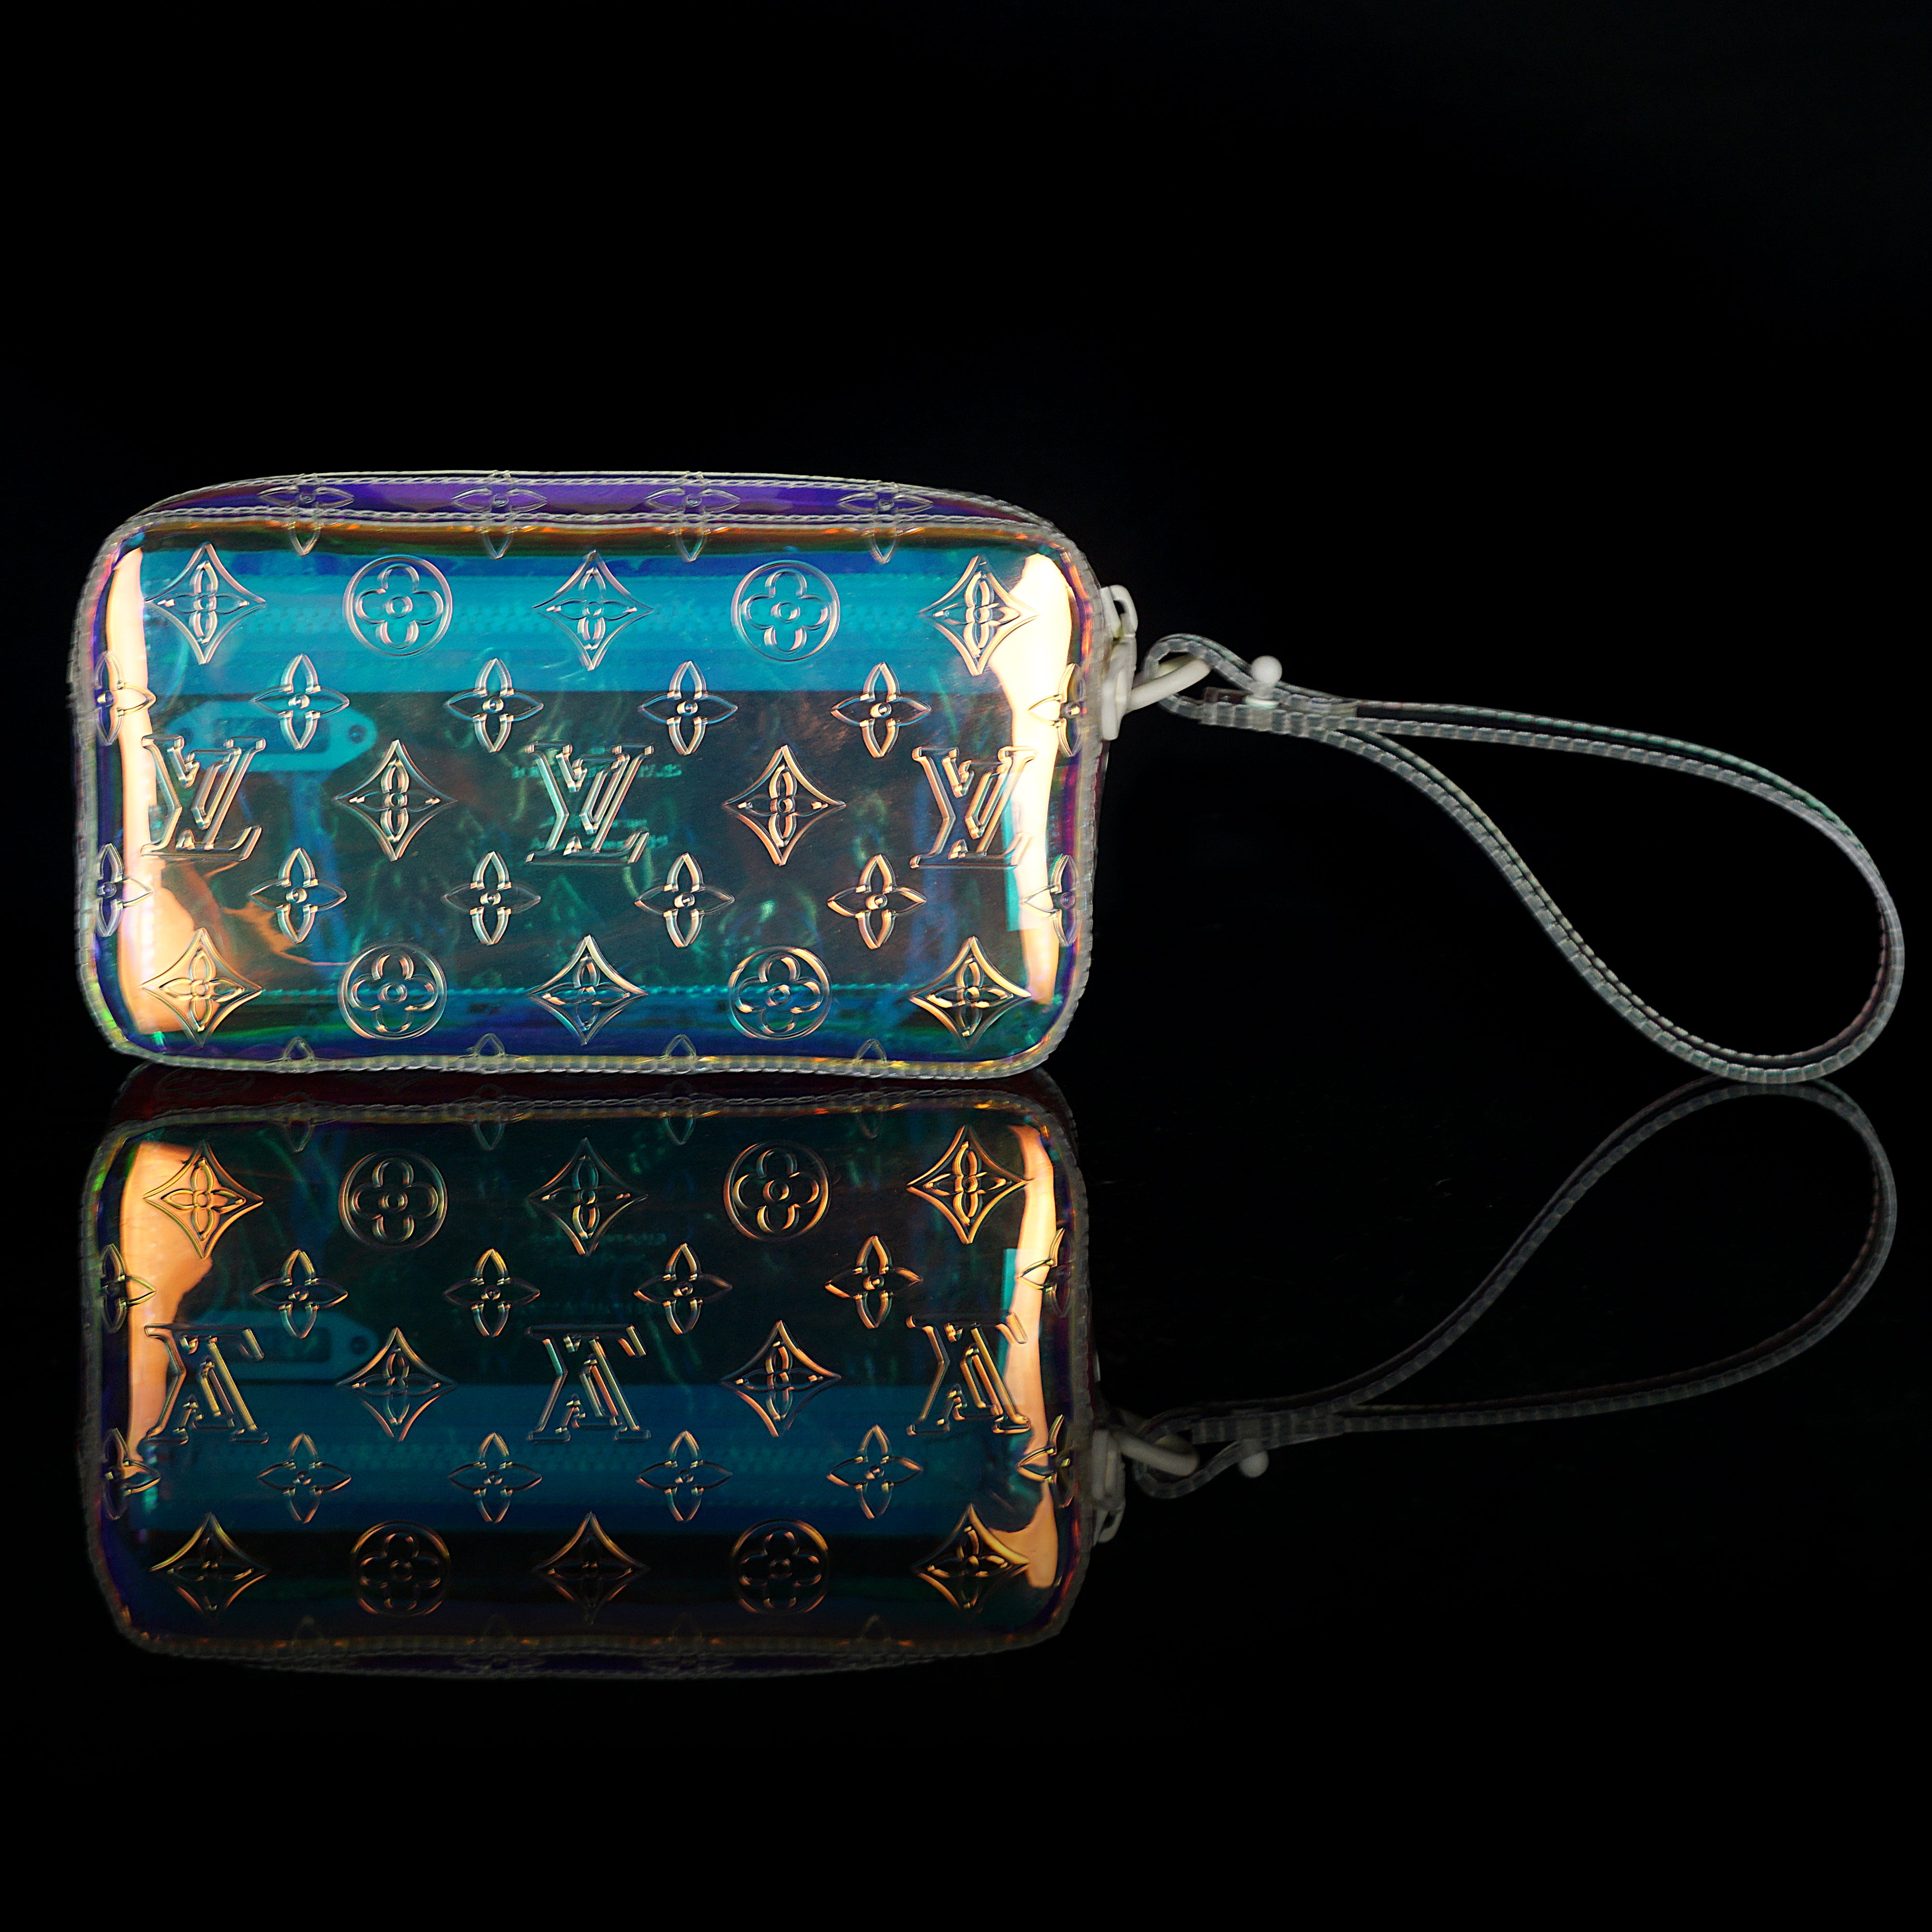 W2C) Virgil Abloh X Louis Vuitton Prism Pochette Volga / Monogram Prism  Soft Trunk Bag : r/RepladiesDesigner